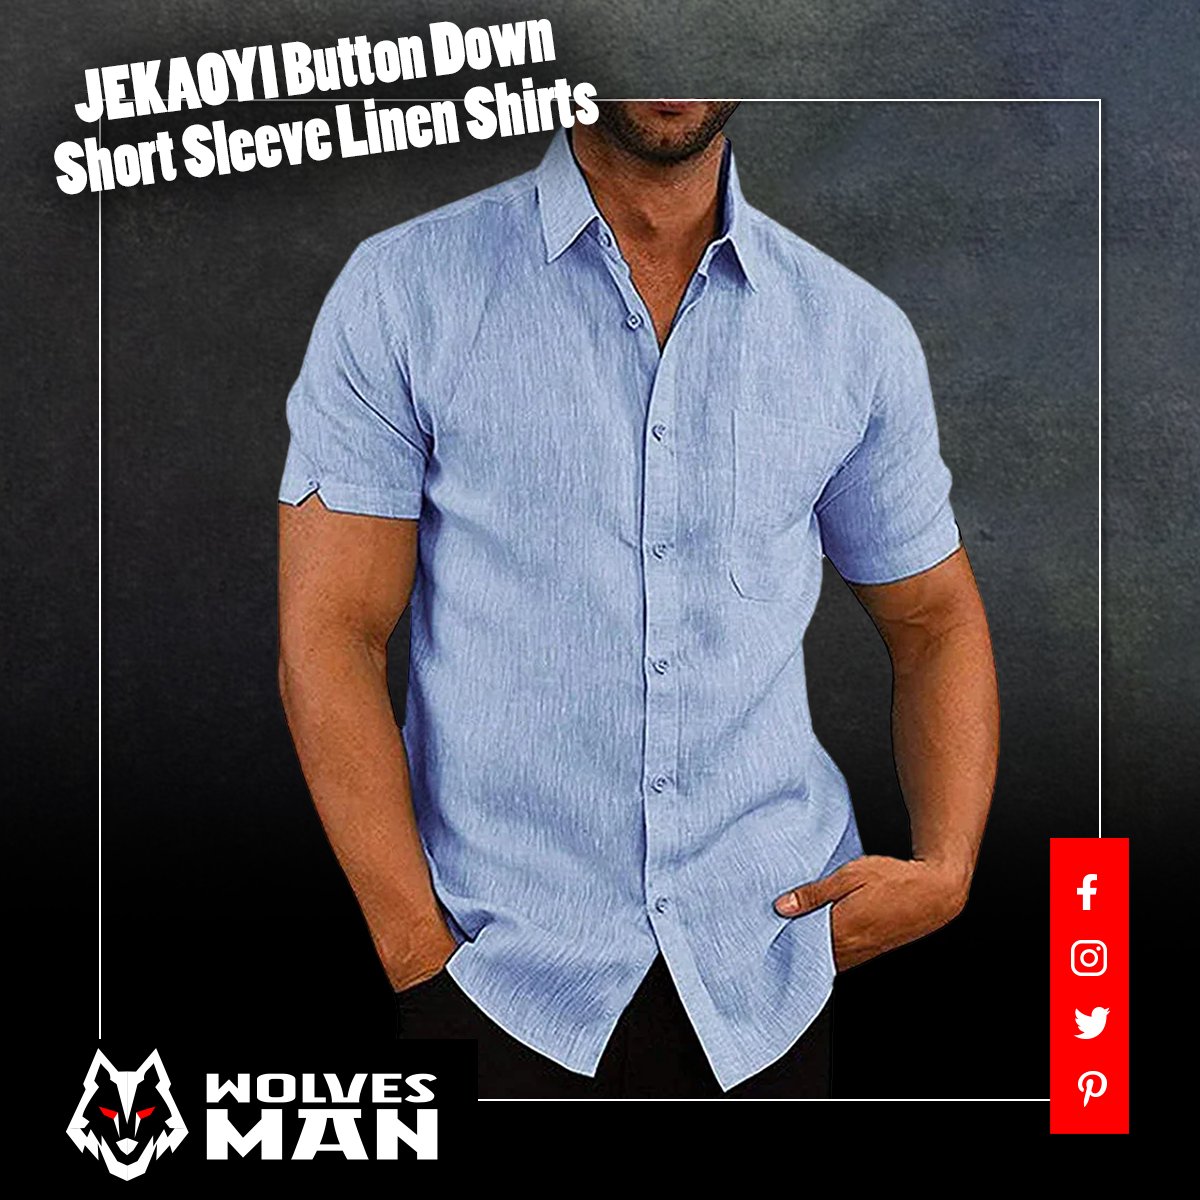 amzn.to/3XNZEha
JEKAOYI Button Down Short Sleeve Linen Shirts for Men Summer Casual 

#Mensfashion #menstyle #mensgym #watchesformen #mensshirts
wolvesman.com
facebook.com/wolvesman05/
instagram.com/wolvesman05/
pinterest.com/wolvesman05/